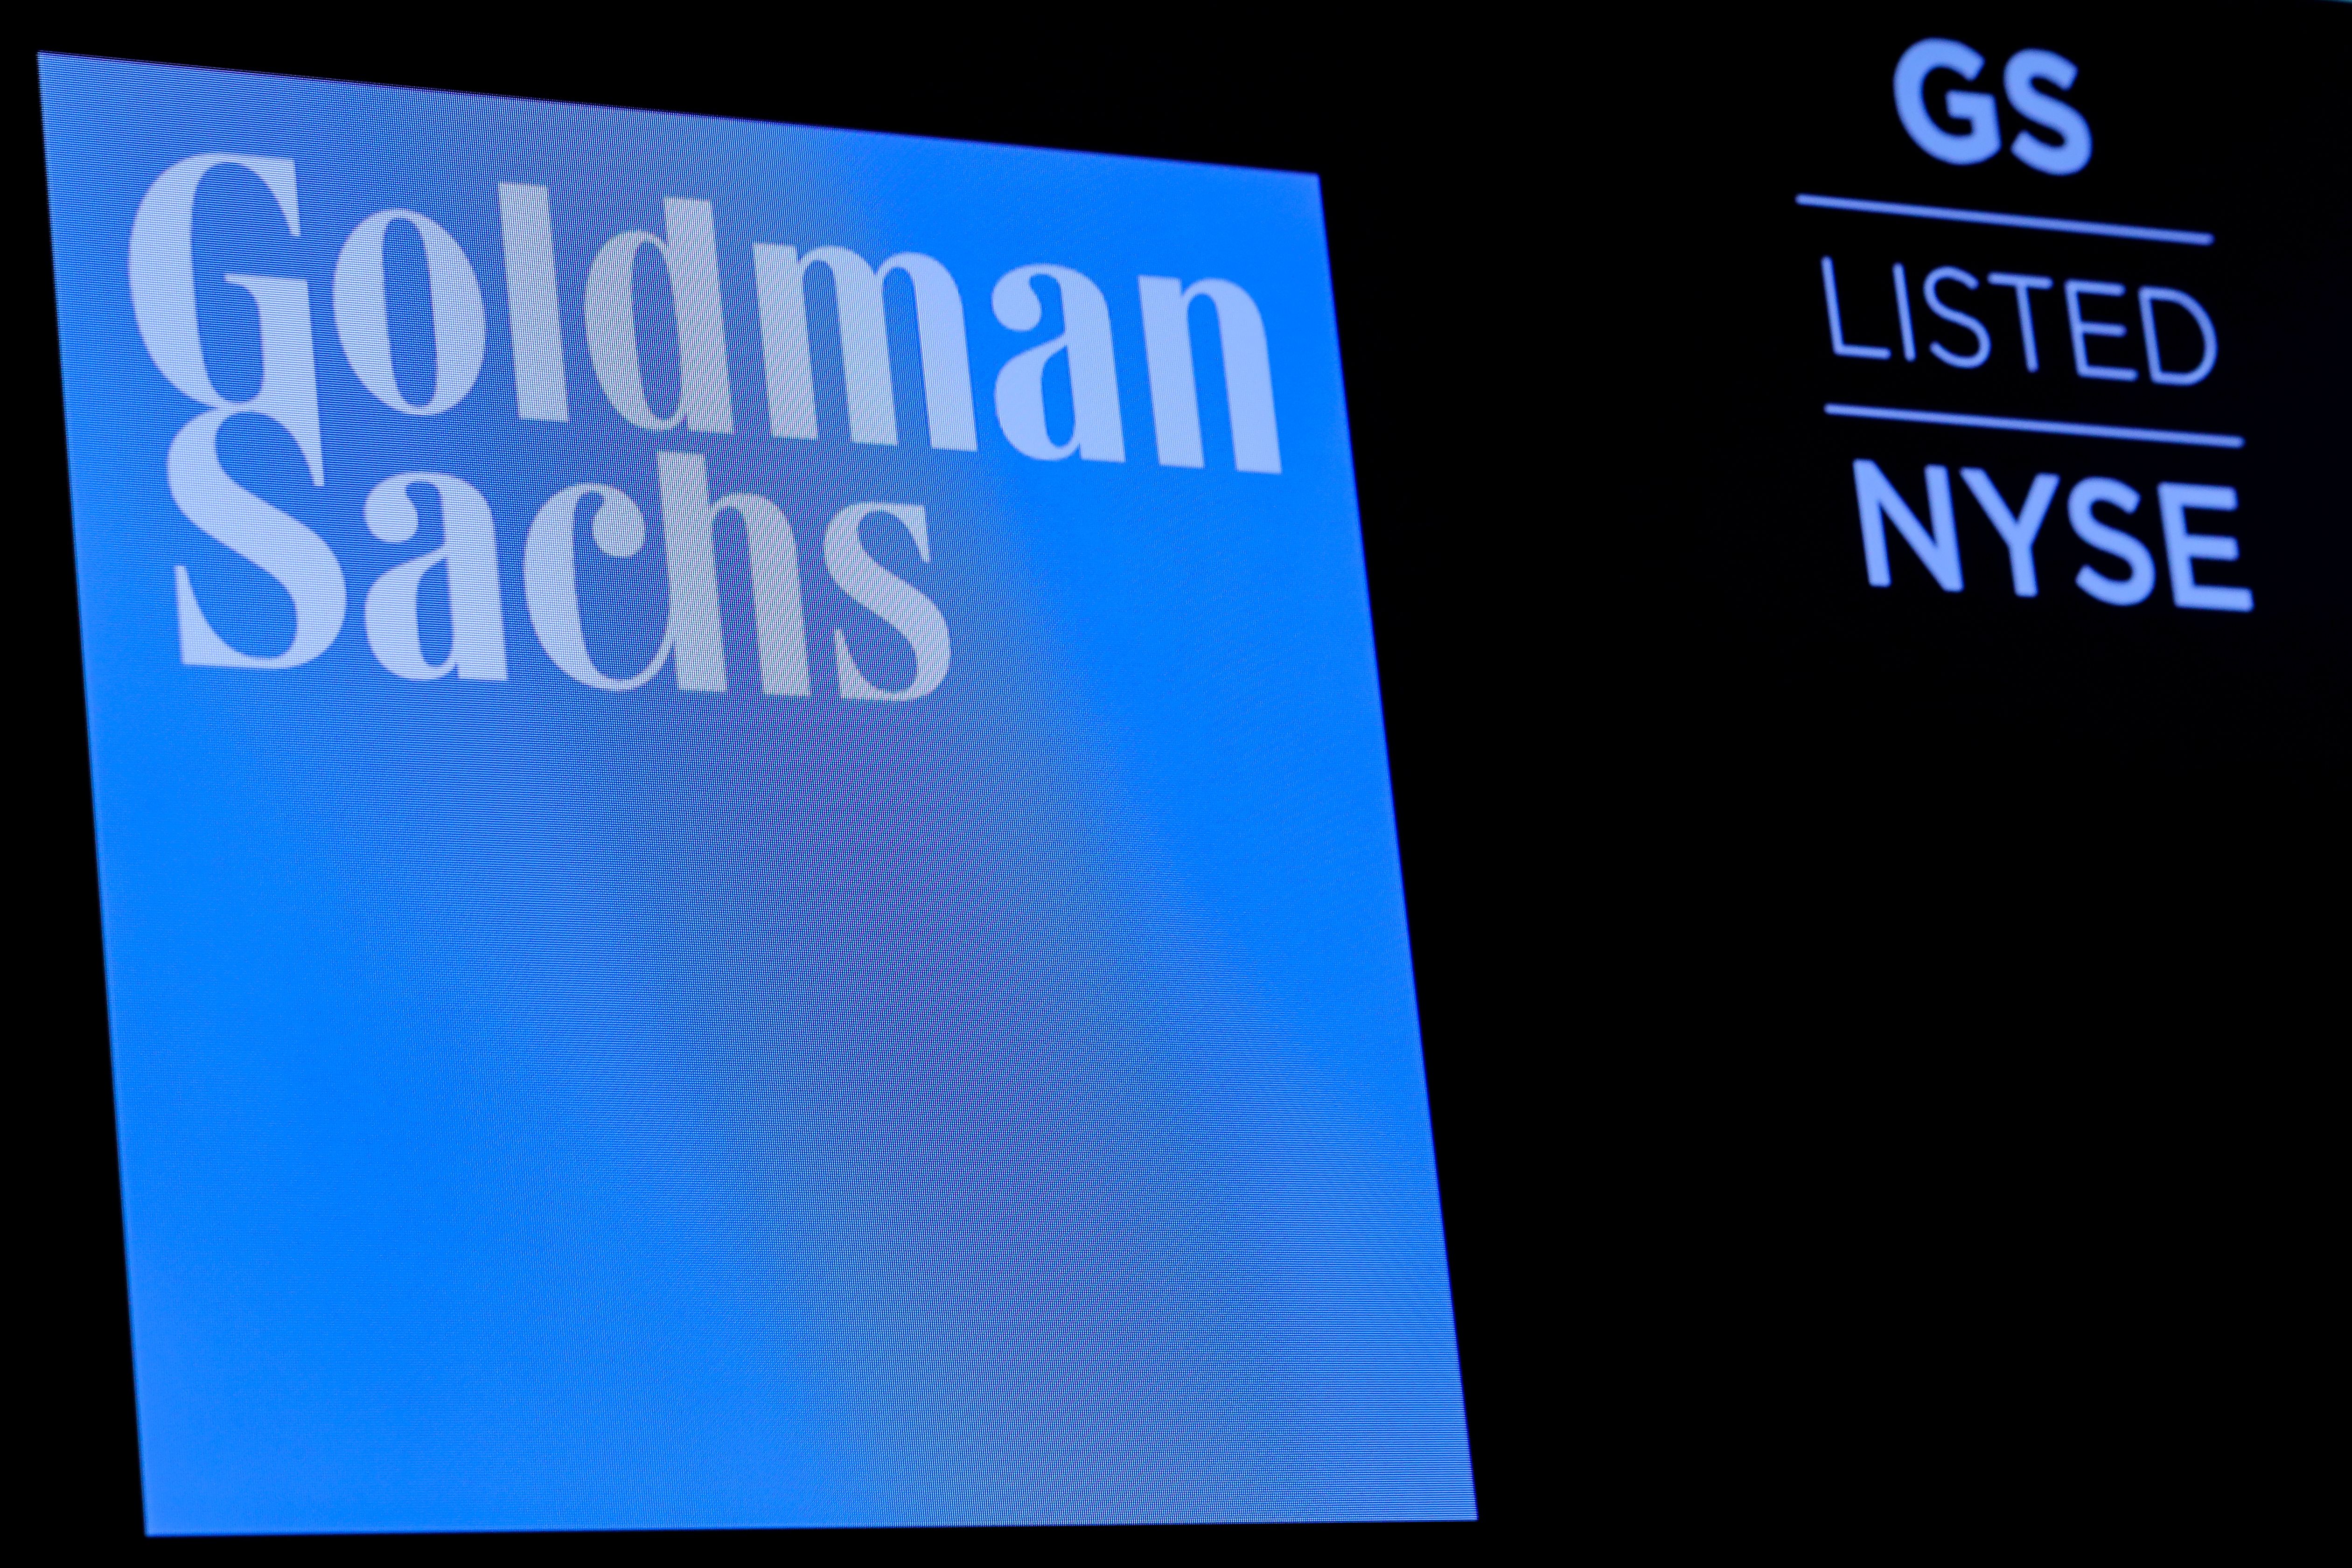 Goldman Sachs - โกลแมน แซคส์ -  รอยเตอร์ส 